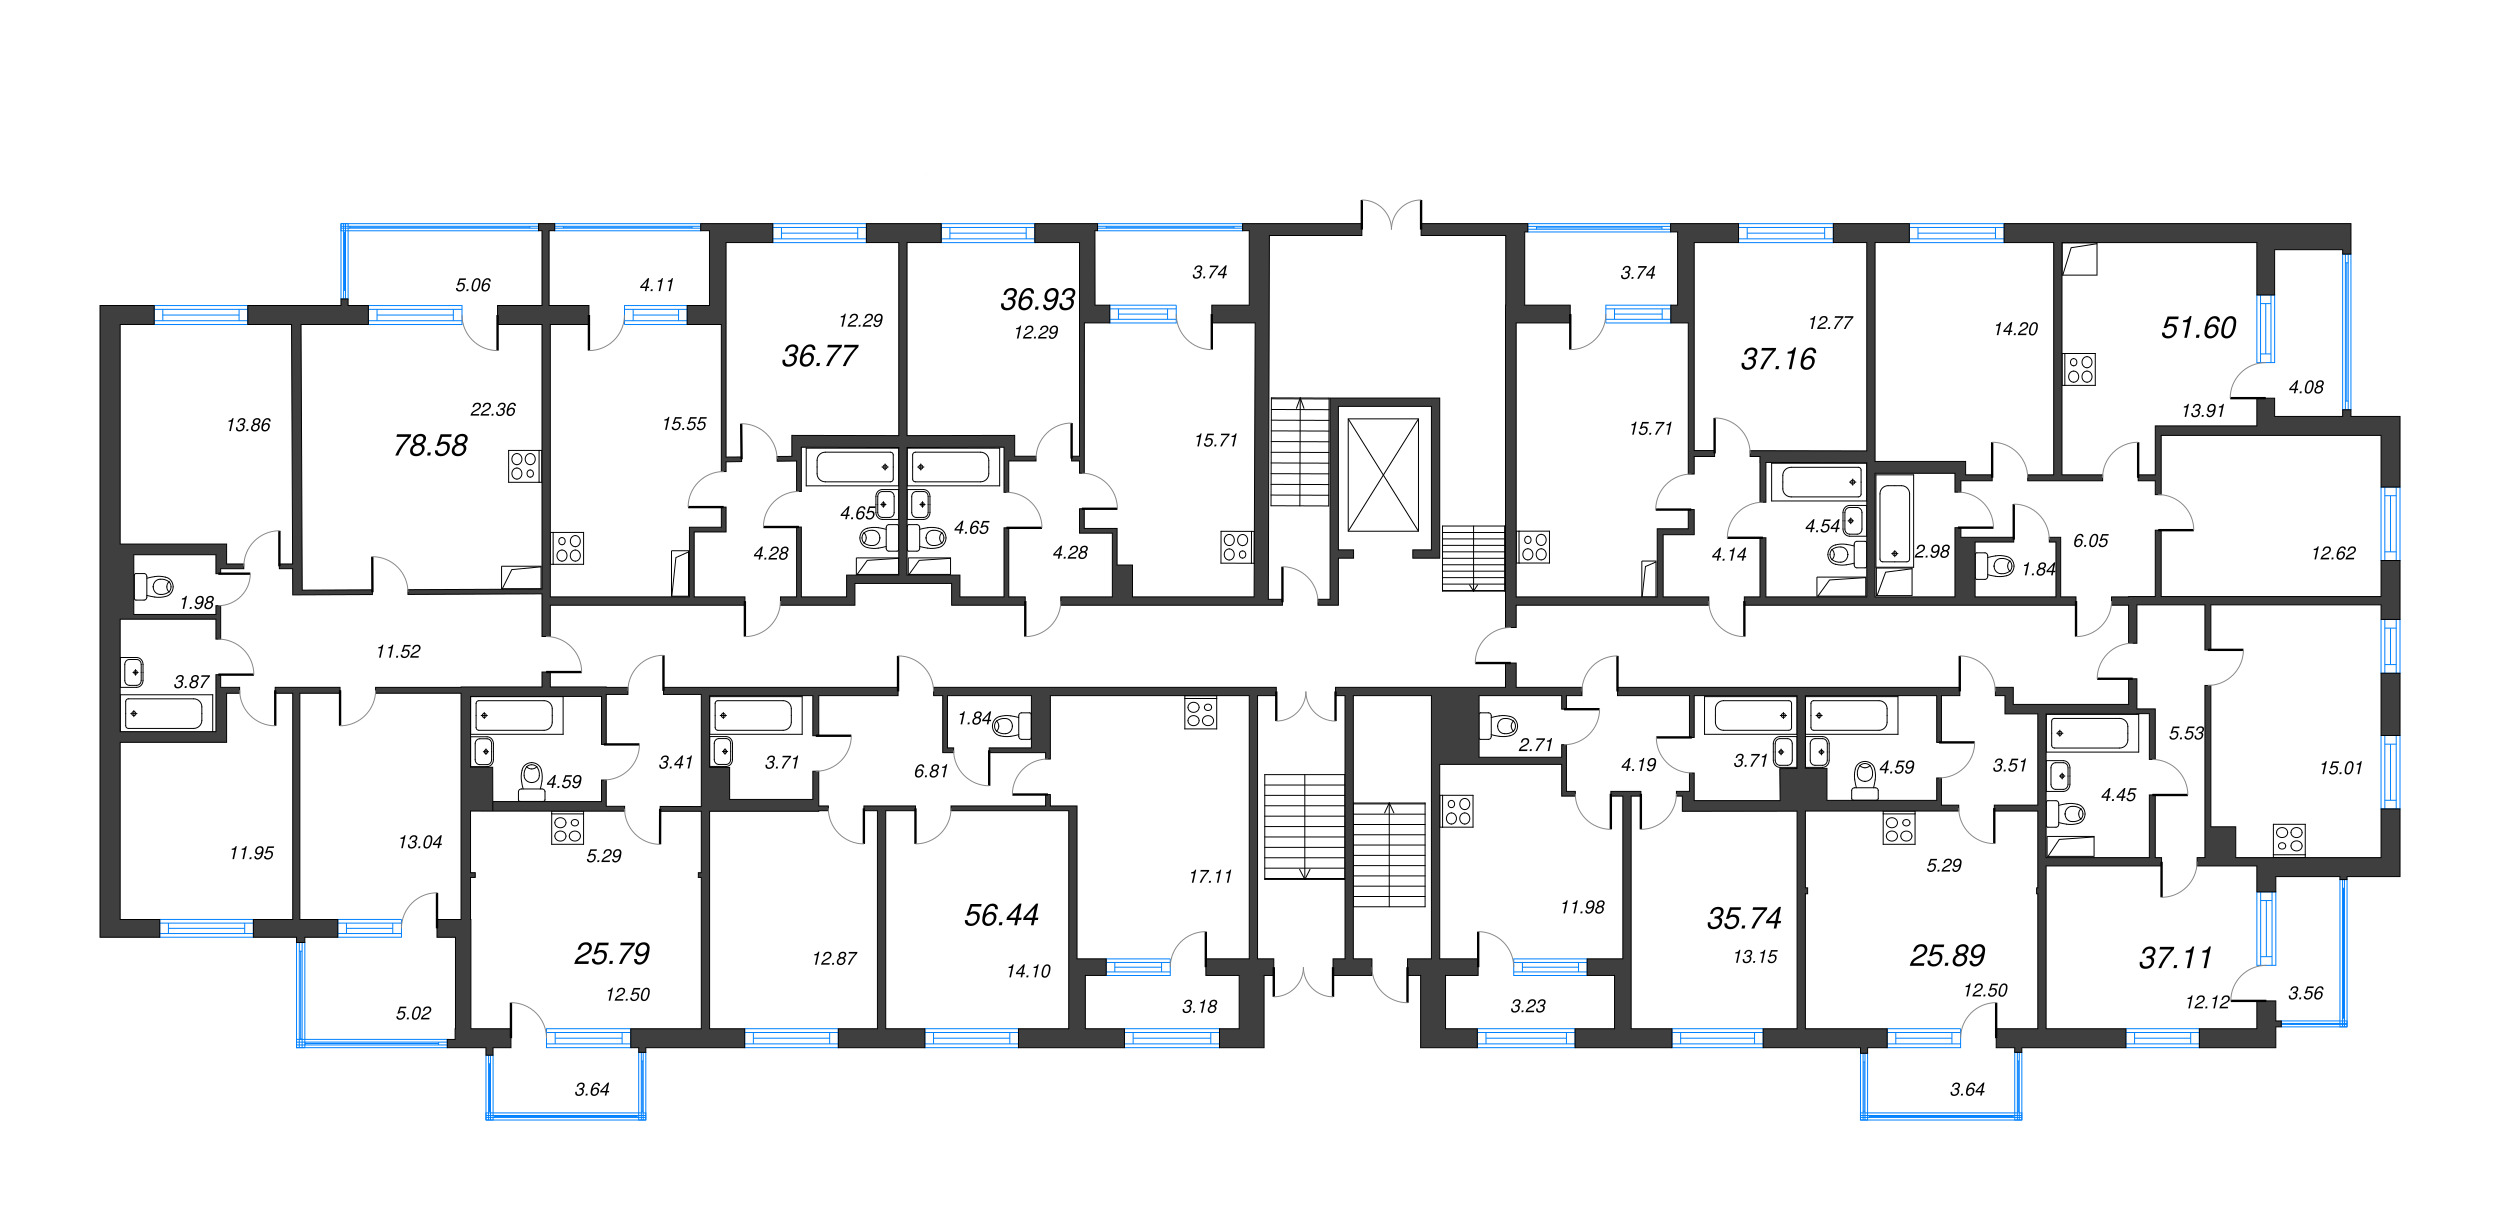 4-комнатная (Евро) квартира, 78.58 м² - планировка этажа